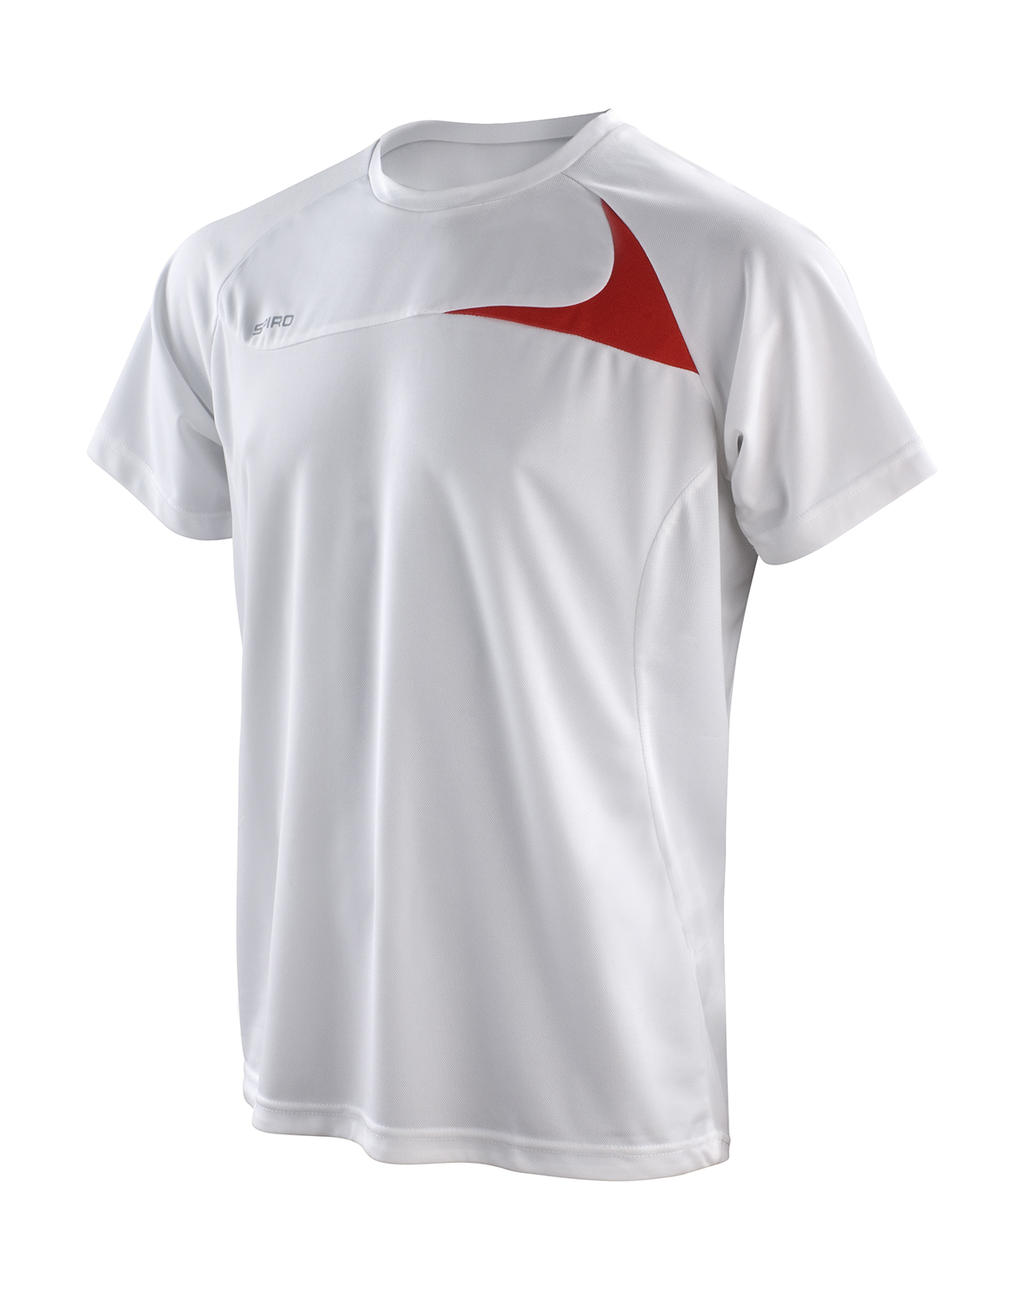  Spiro Mens Dash Training Shirt in Farbe White/Red